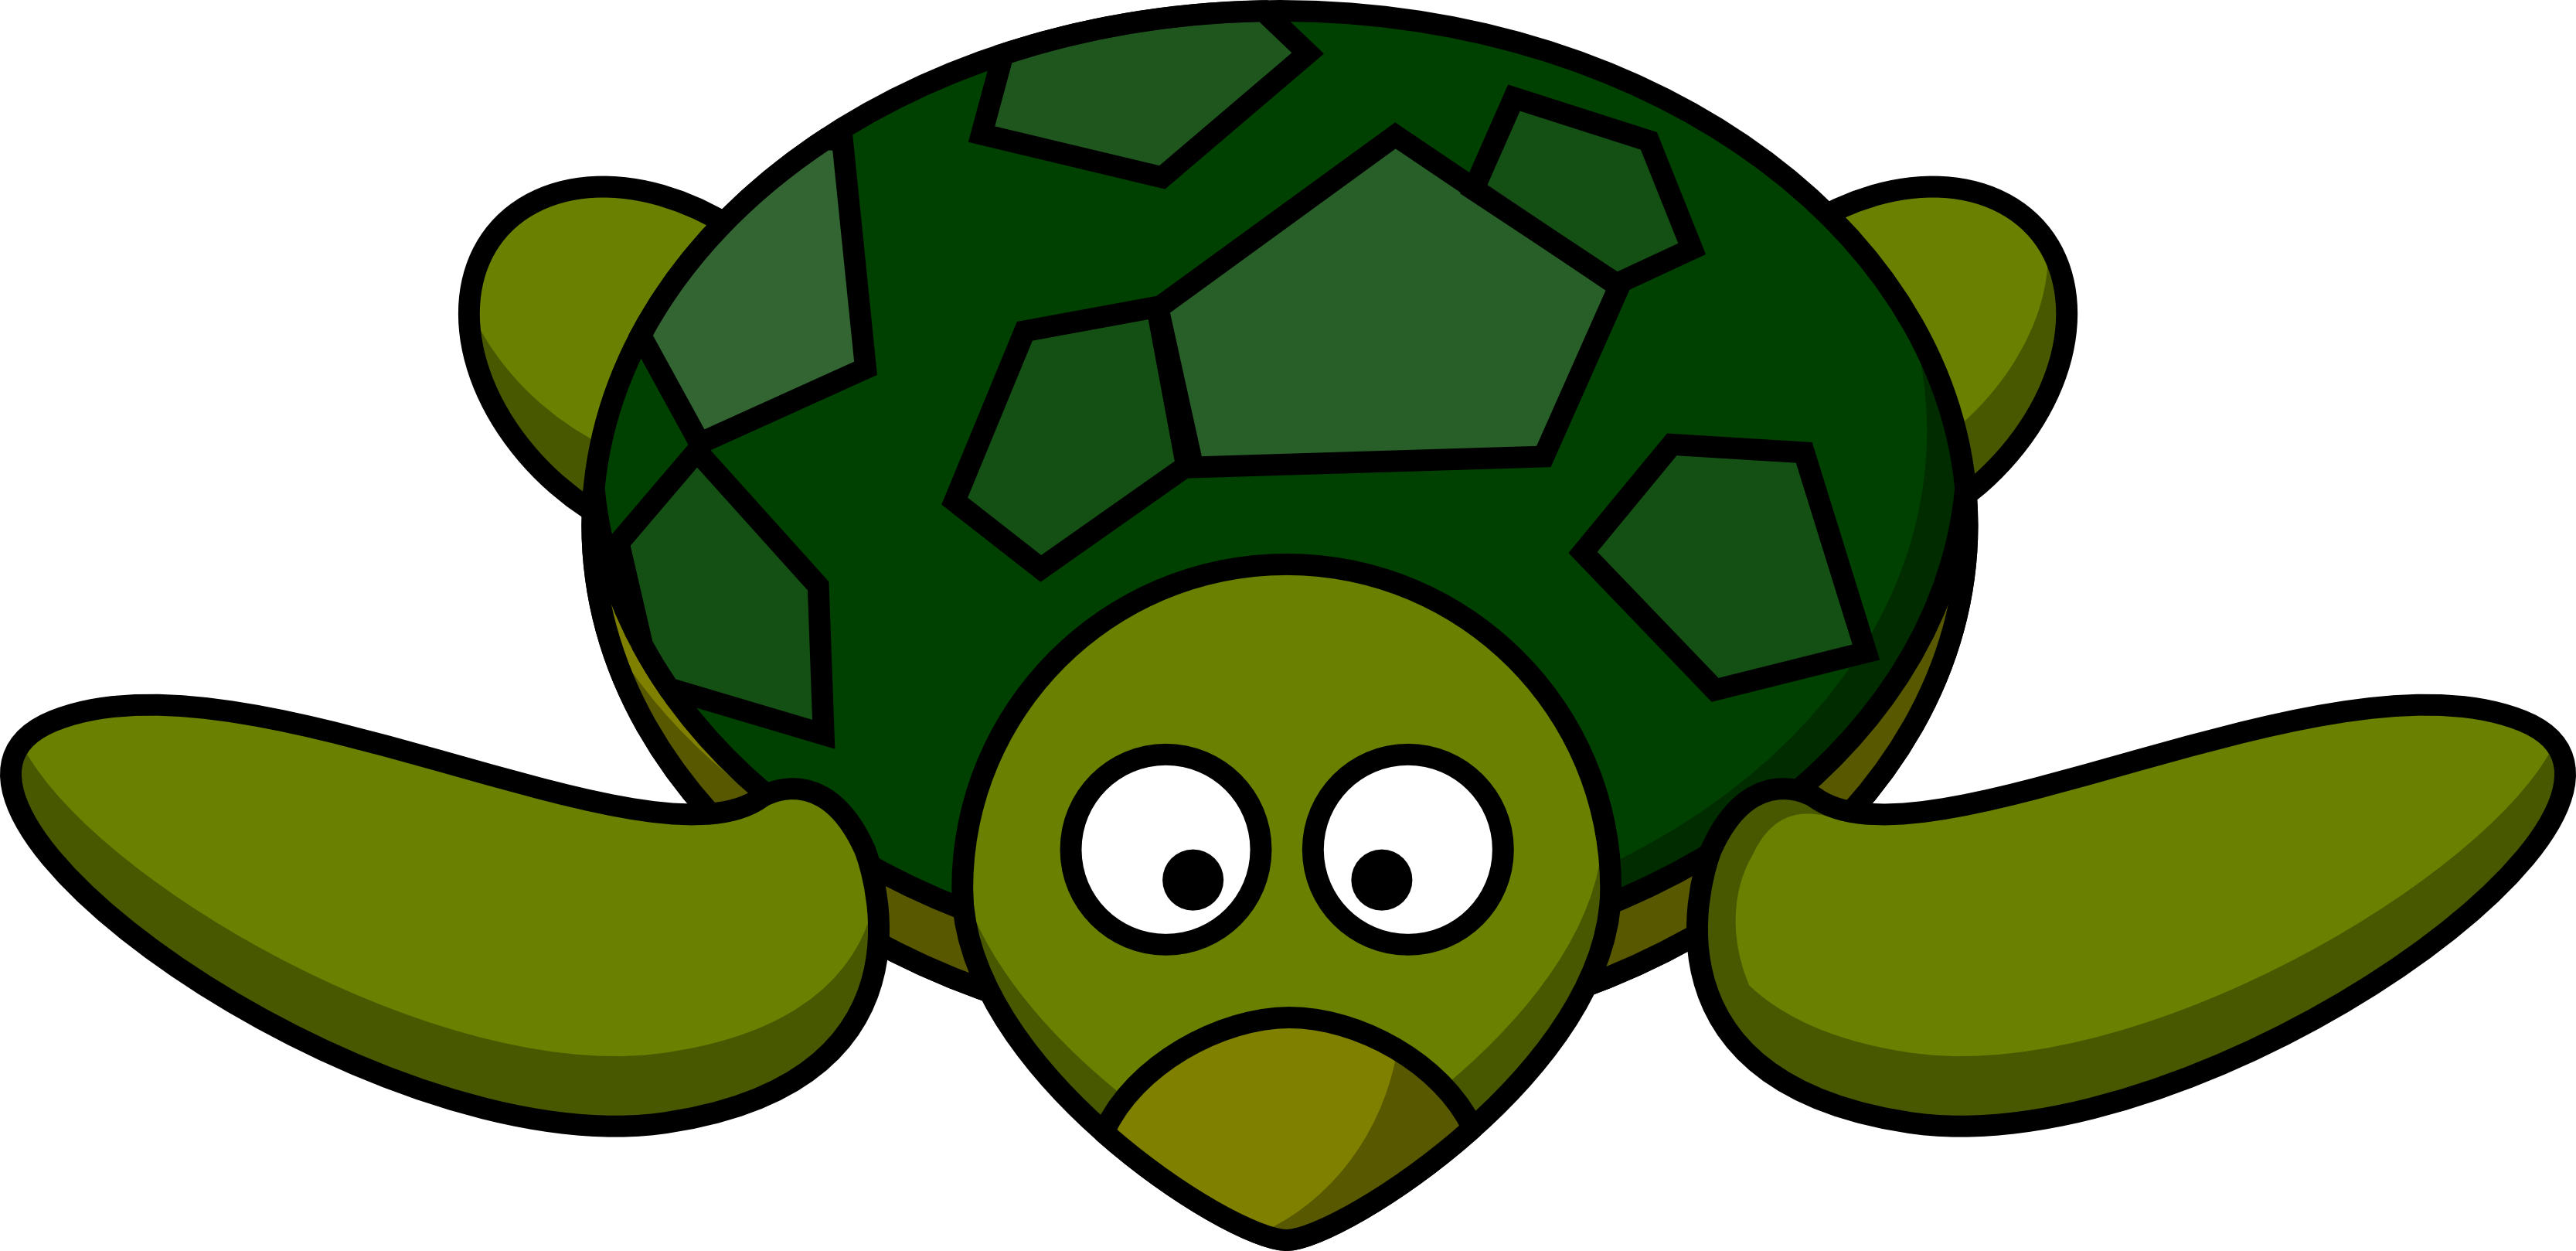 Turtle clip art images free clipart images